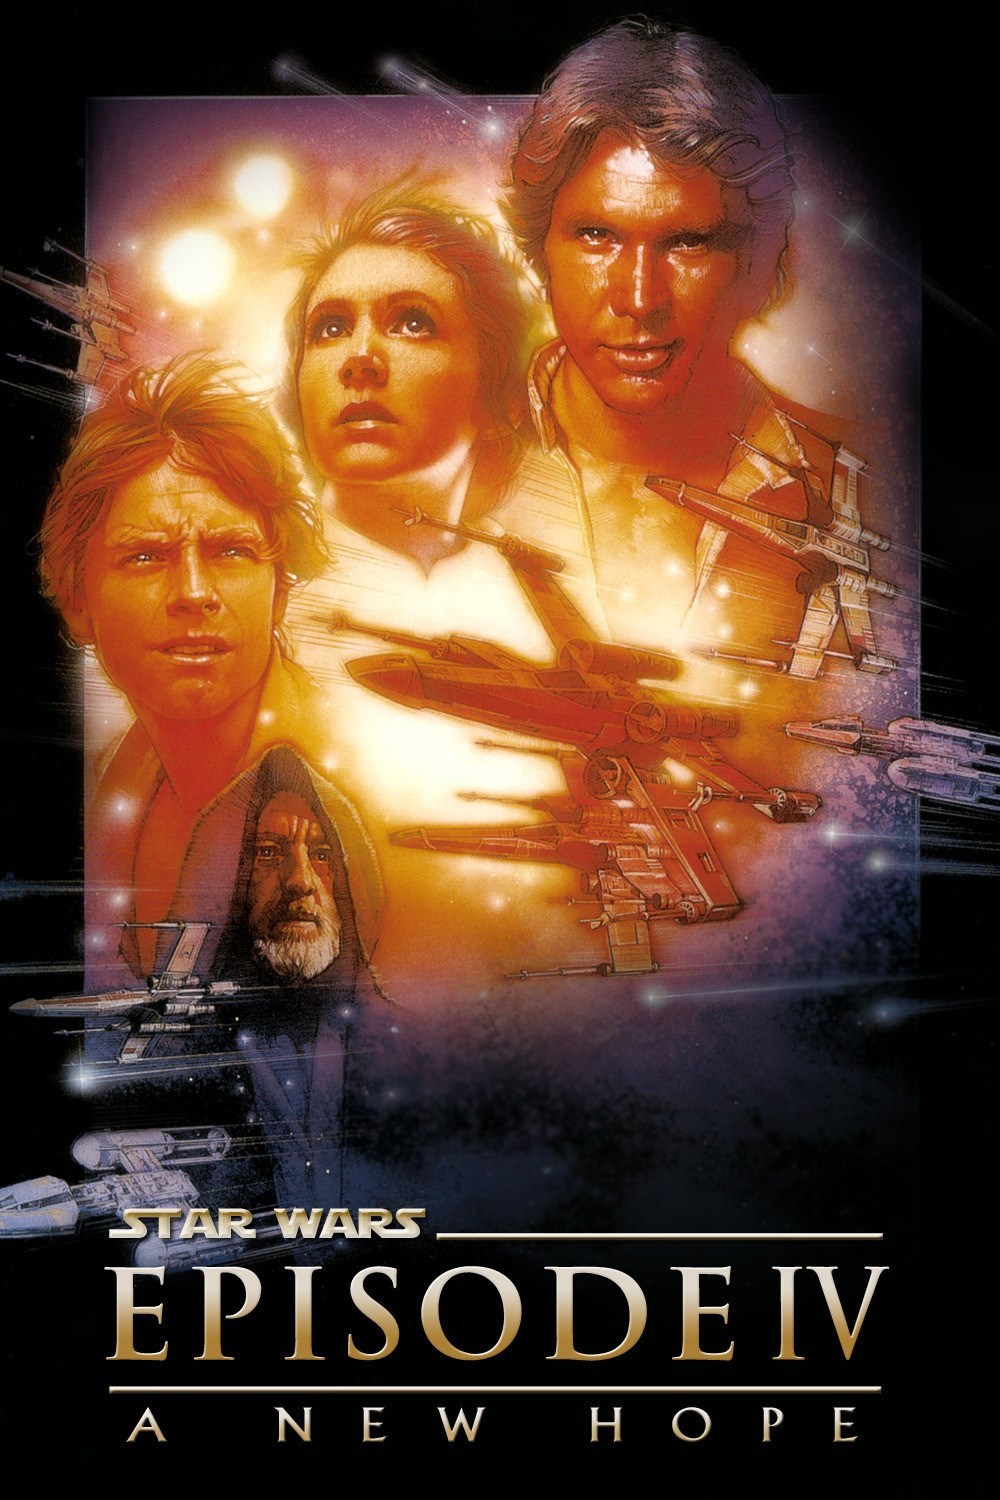 Star Wars Episode IV: A New Hope #2